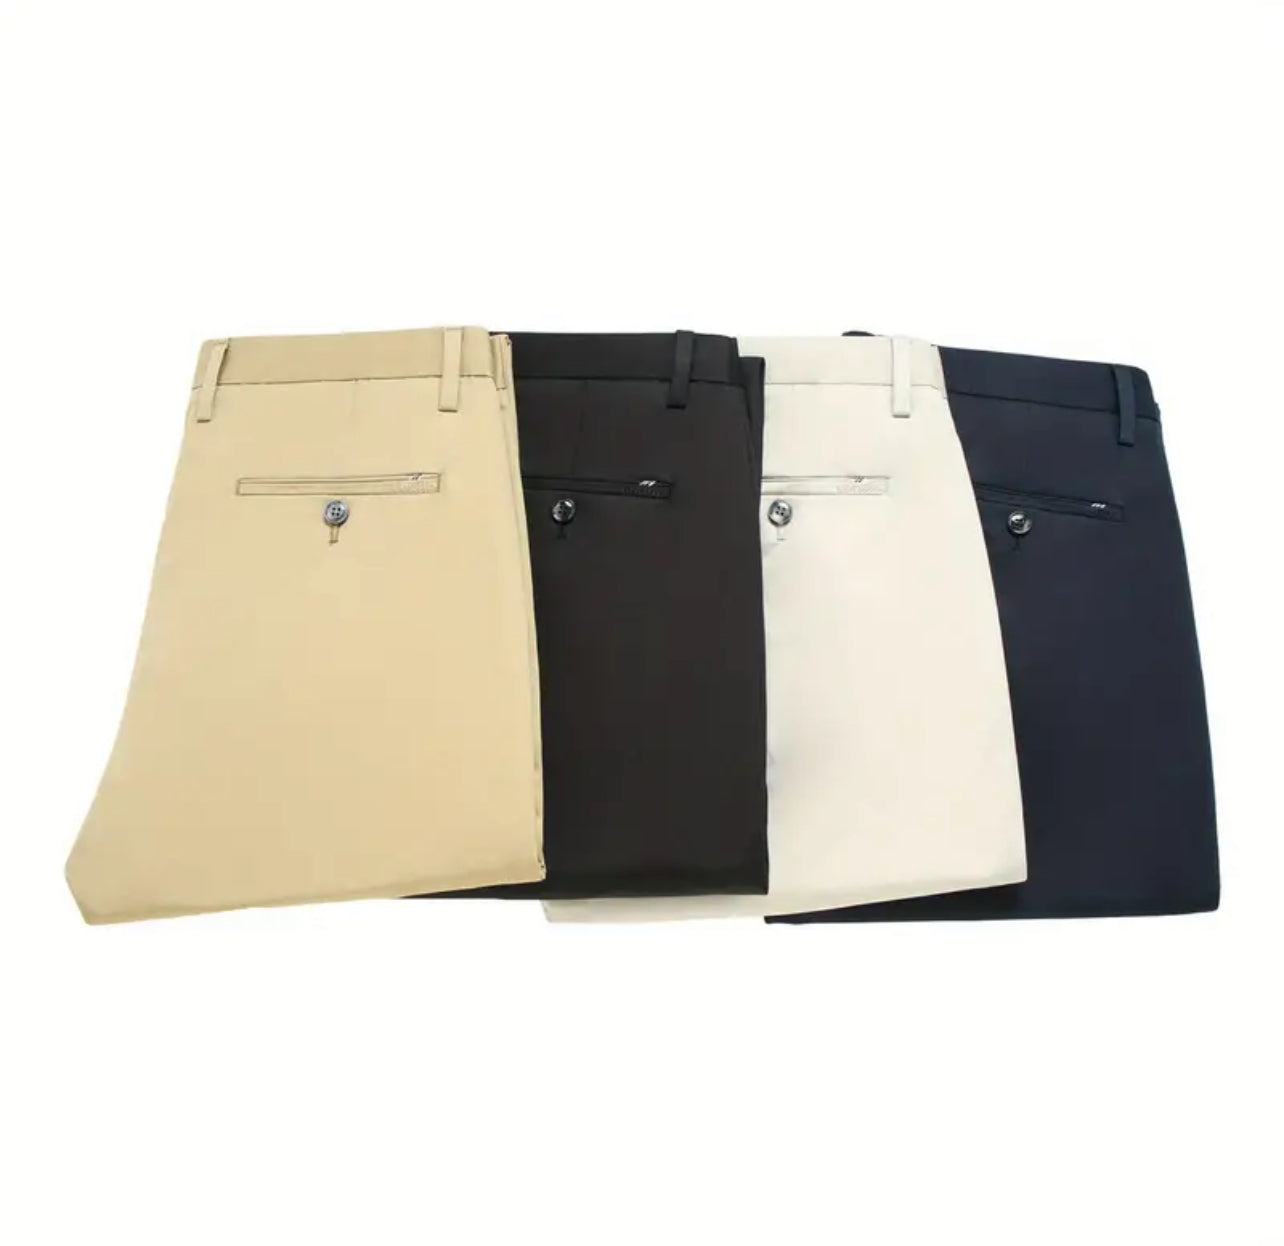 Men's Formal Solid Color Mid Stretch Dress Pants For Spring Summer Business